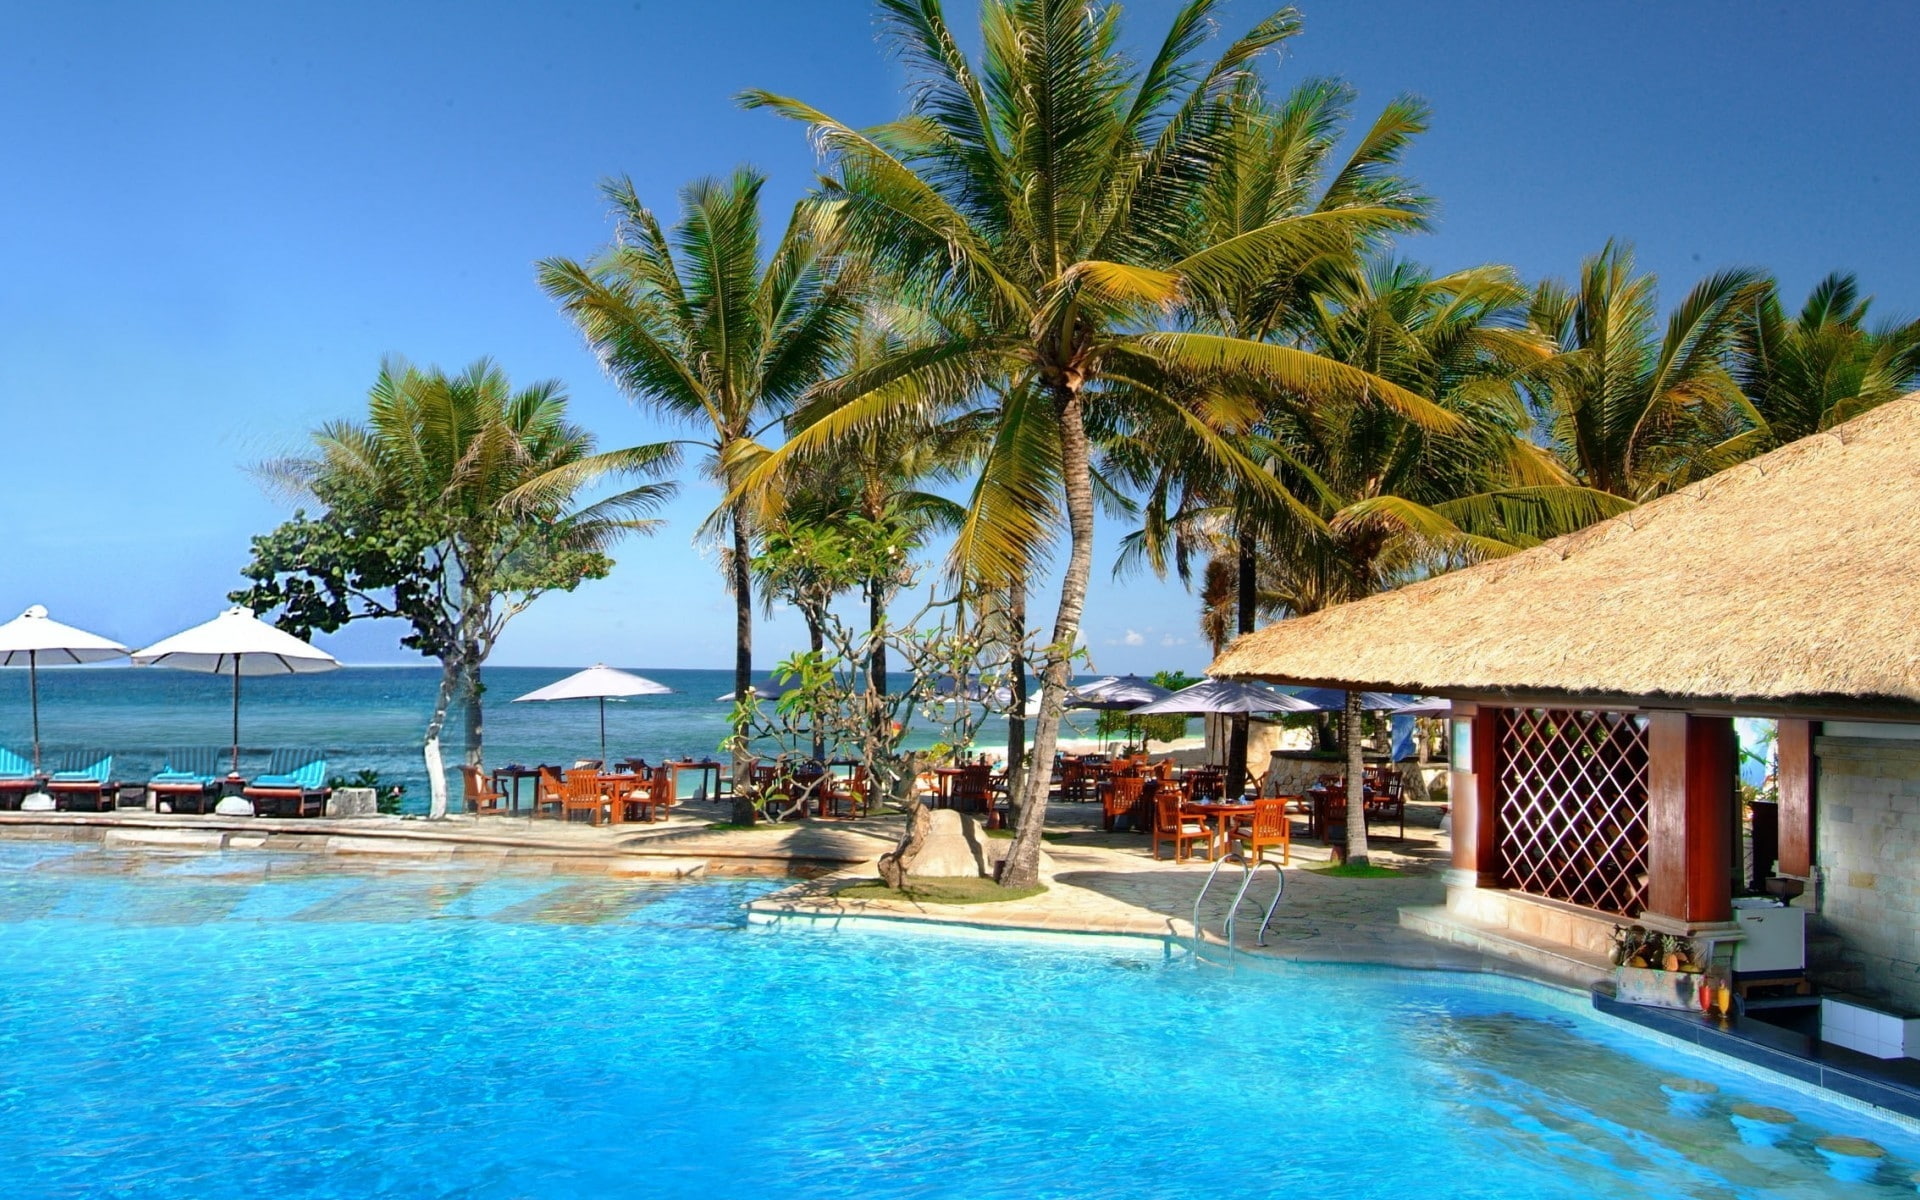 Bali Island Landscape, palm trees, sea, beach umbrellas, swimming pool